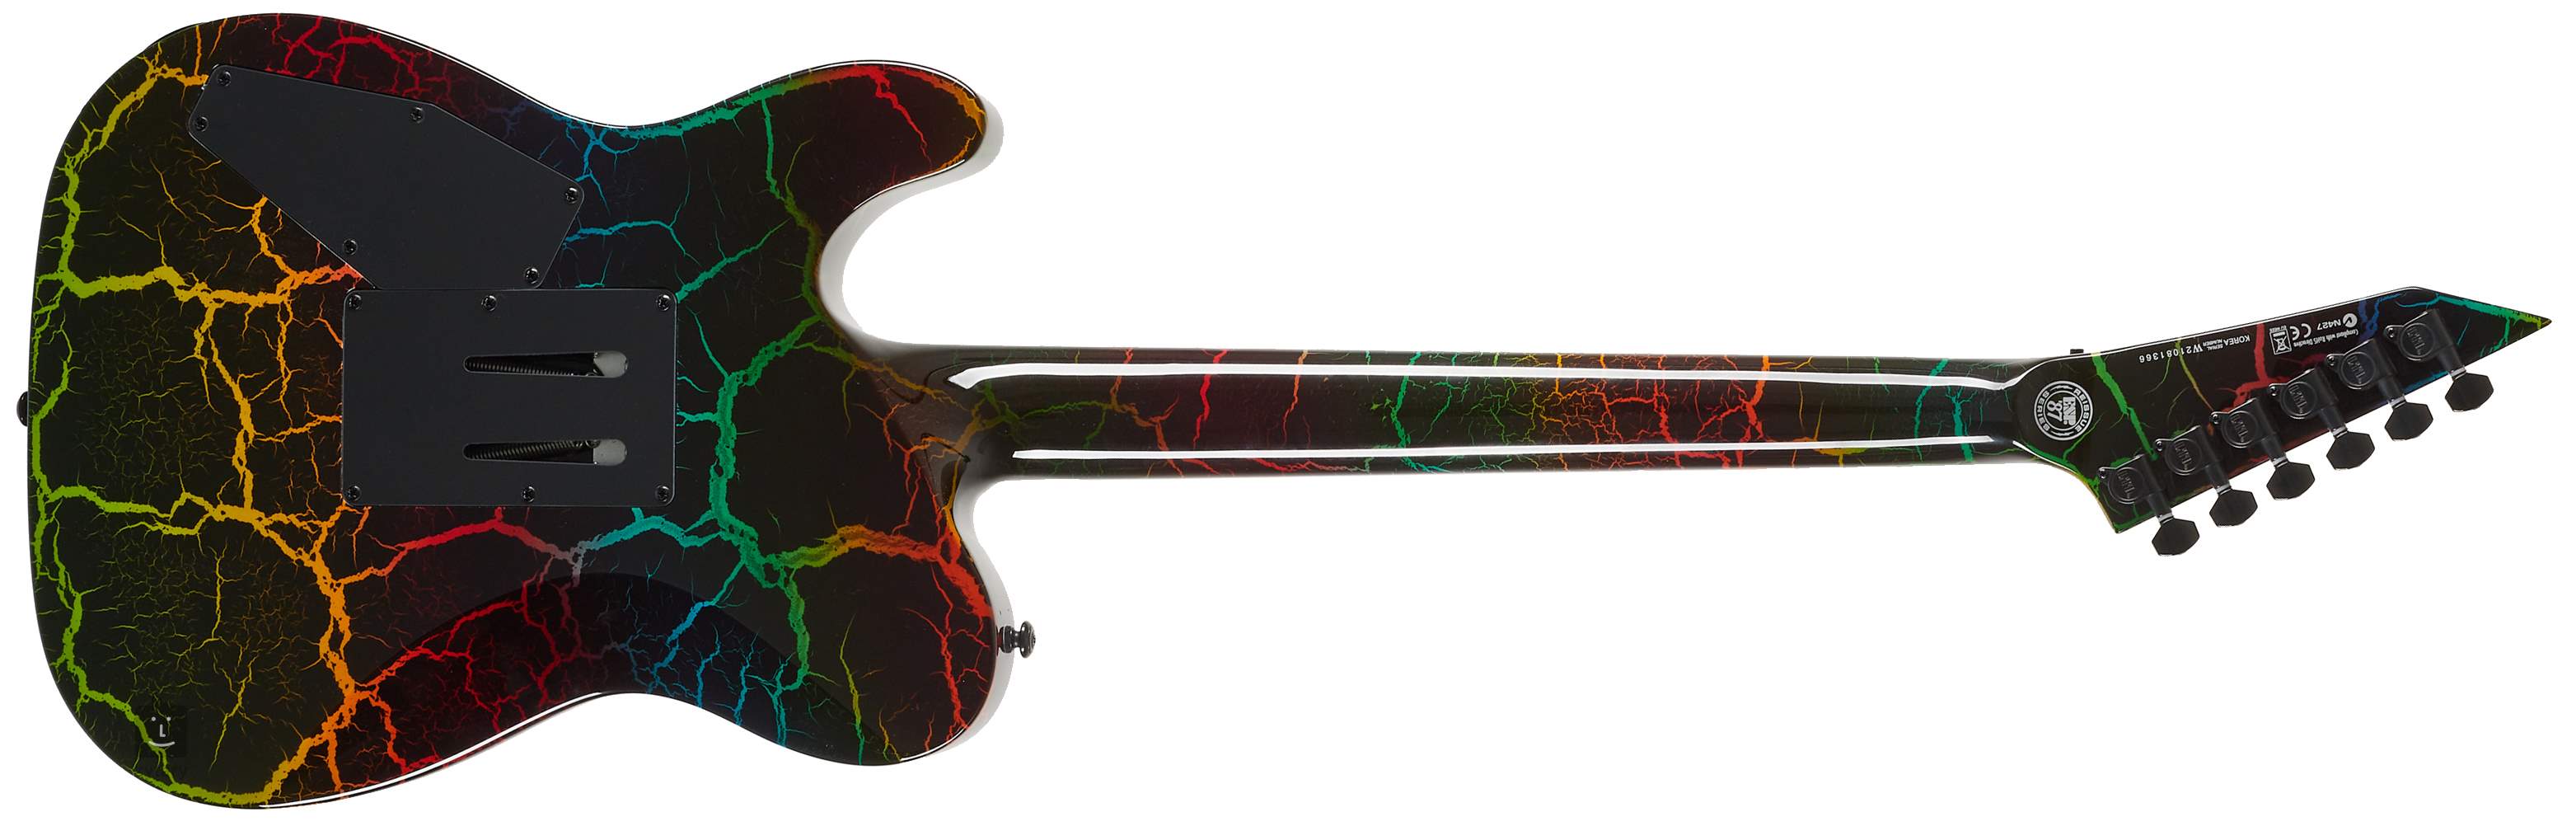 término análogo juicio Suponer ESP LTD Eclipse 87 Rainbow Crackle Guitarra eléctrica